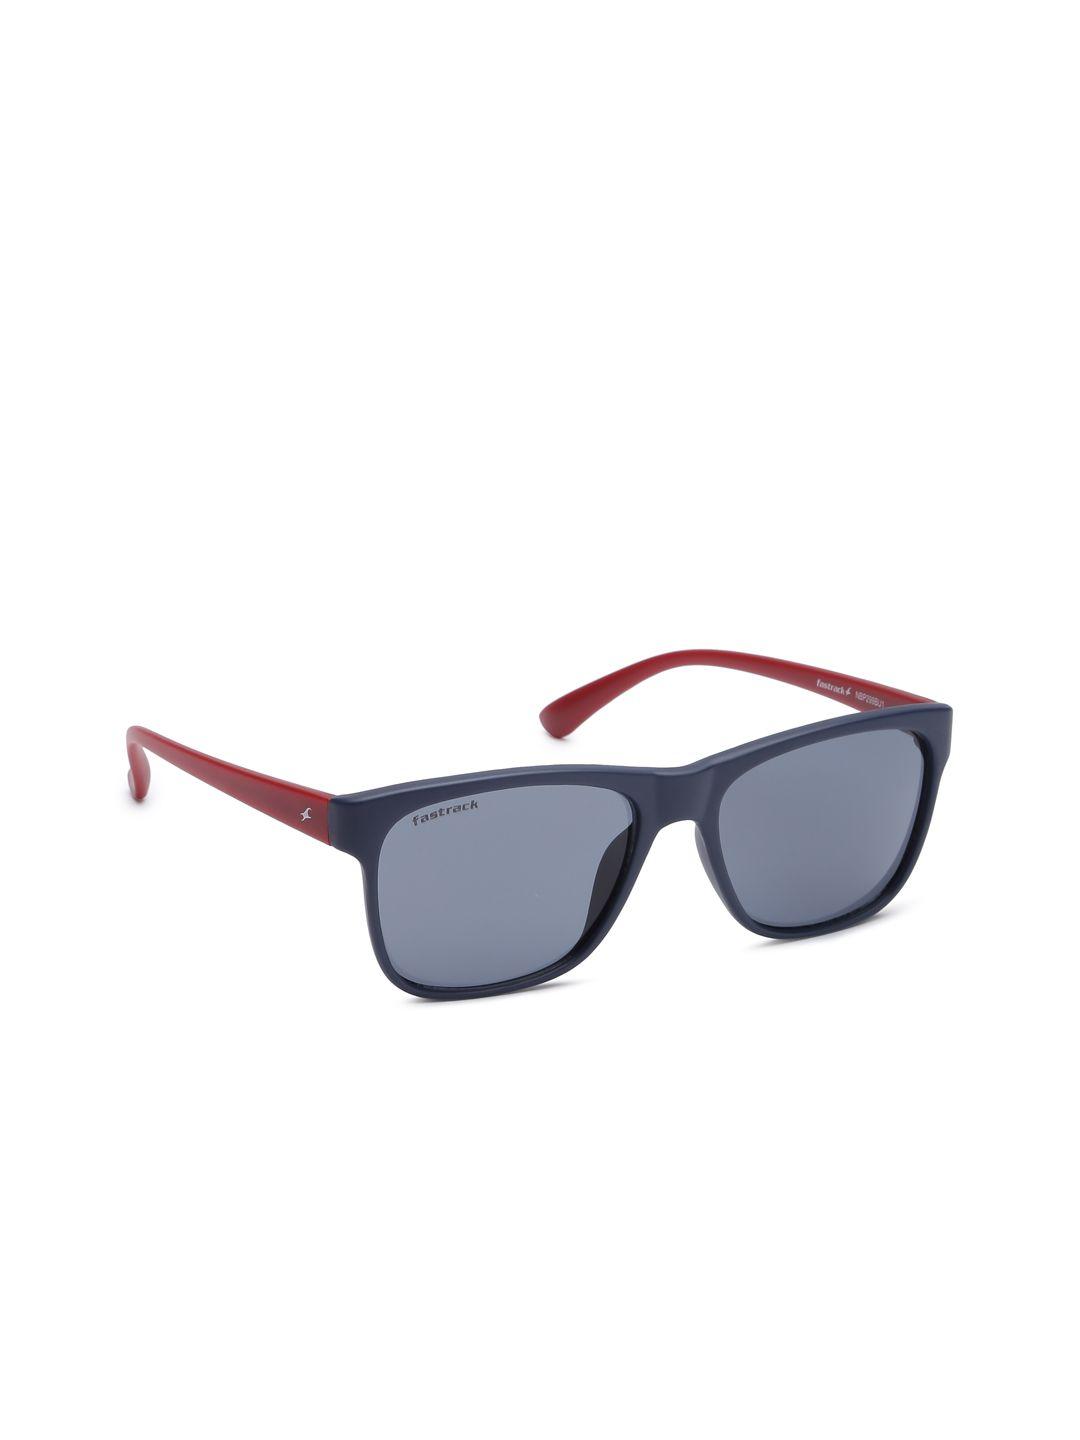 fastrack-men-square-sunglasses-nbp299bu1